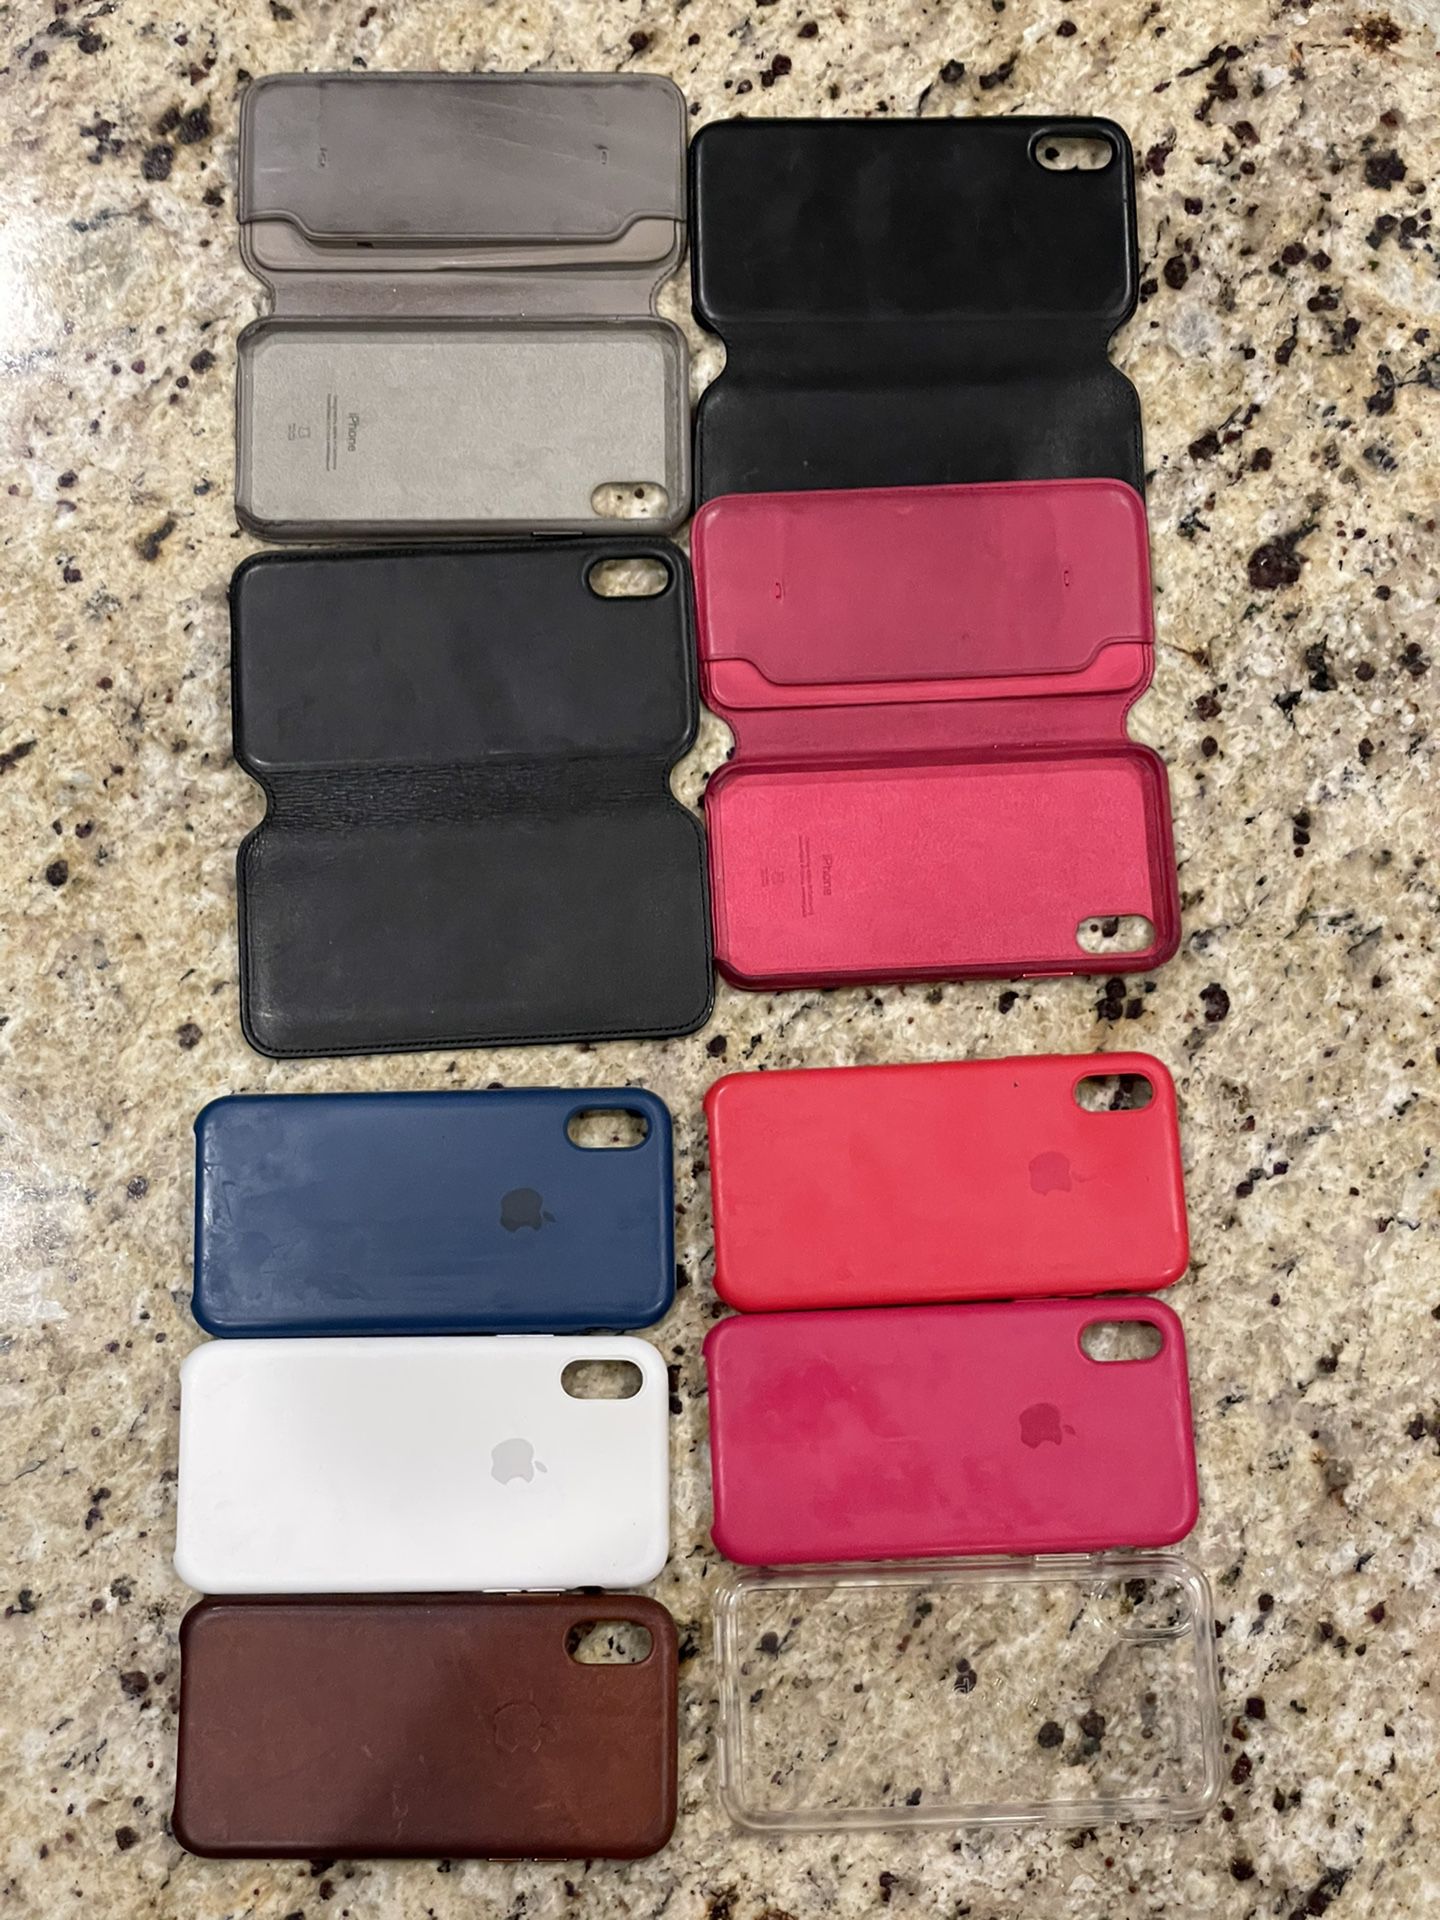 Apple iPhone X cases (10).